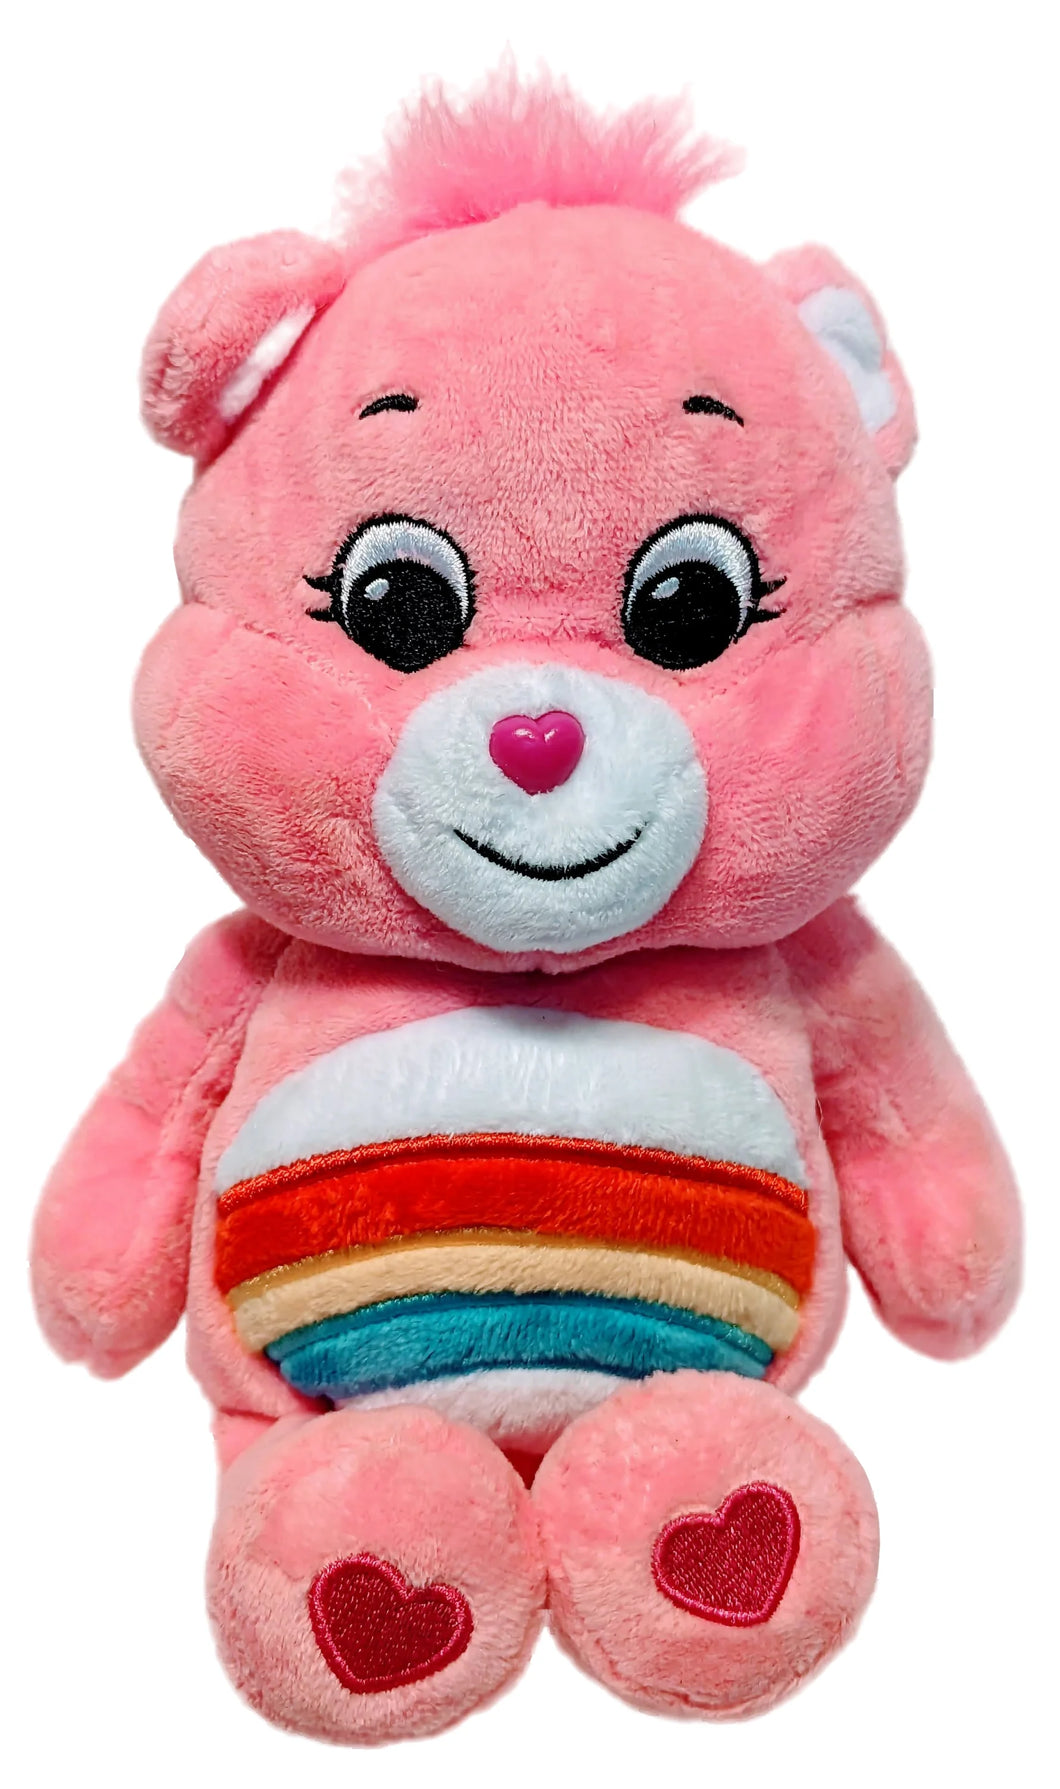 Plush Pink Care Bears Beanie Plush with Rainbow